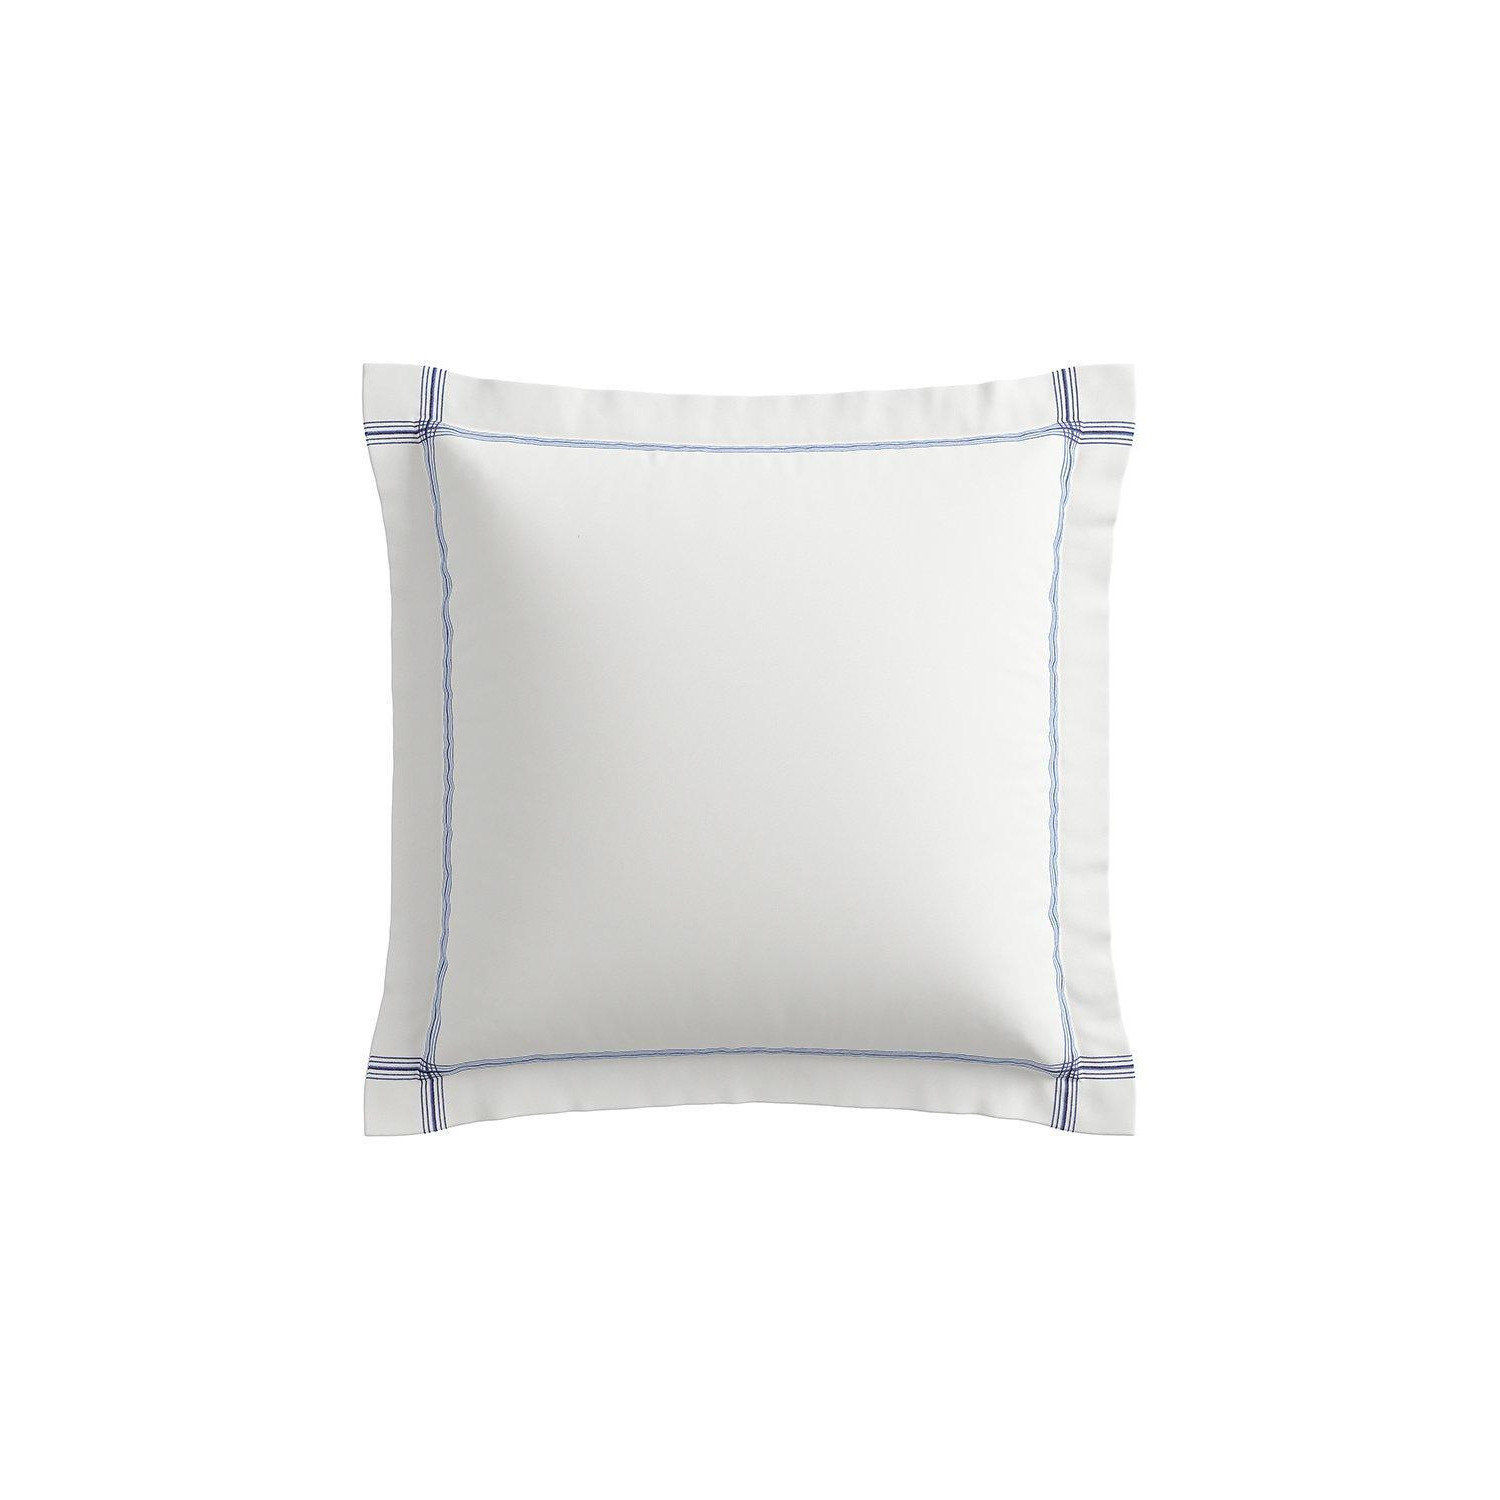 'Voyaging Koi' Embroidered Square Pillowcase - image 1